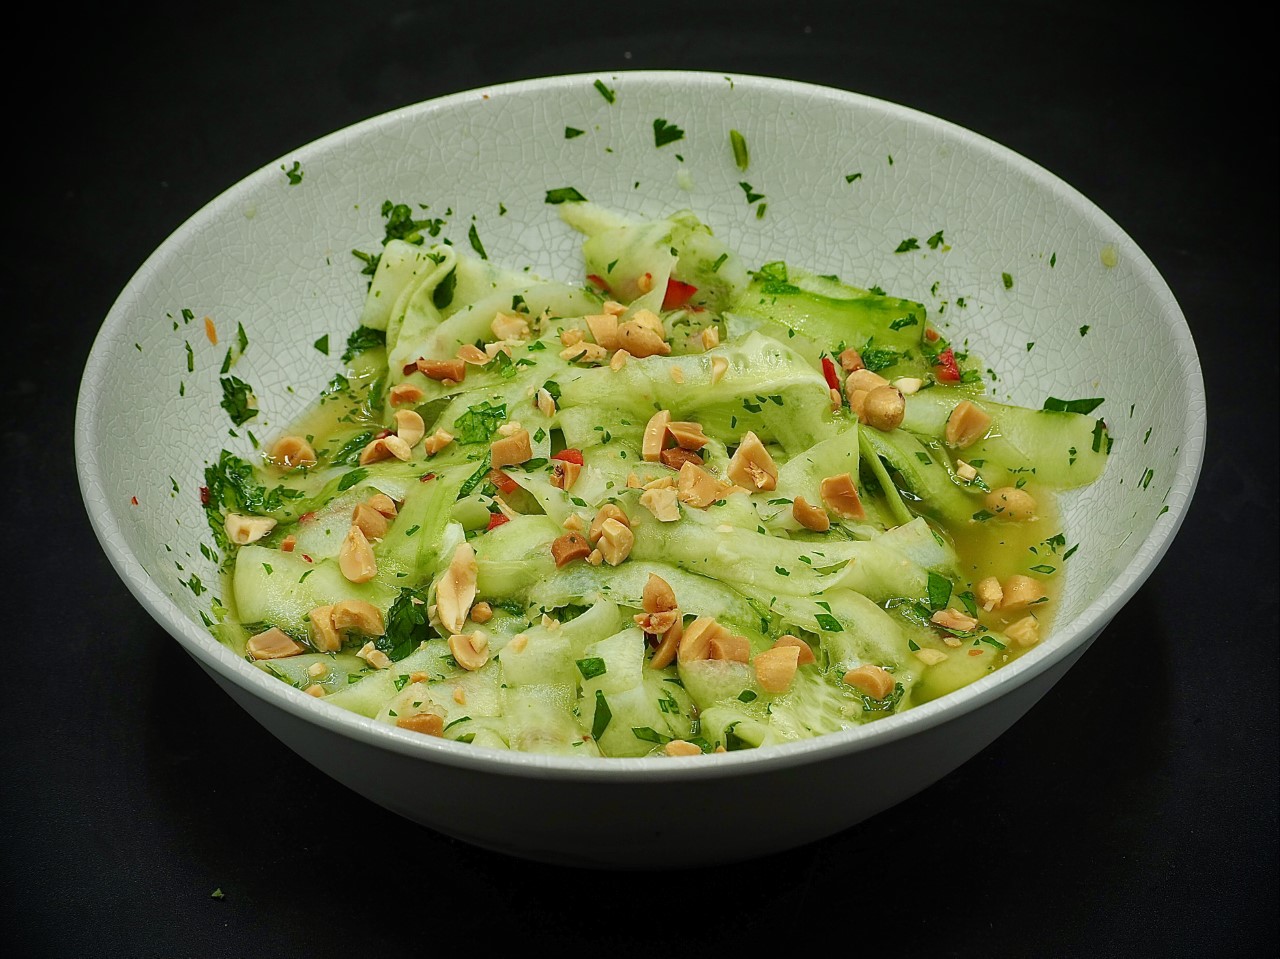 Thai Chili Cucumber Salad with Roasted Peanuts